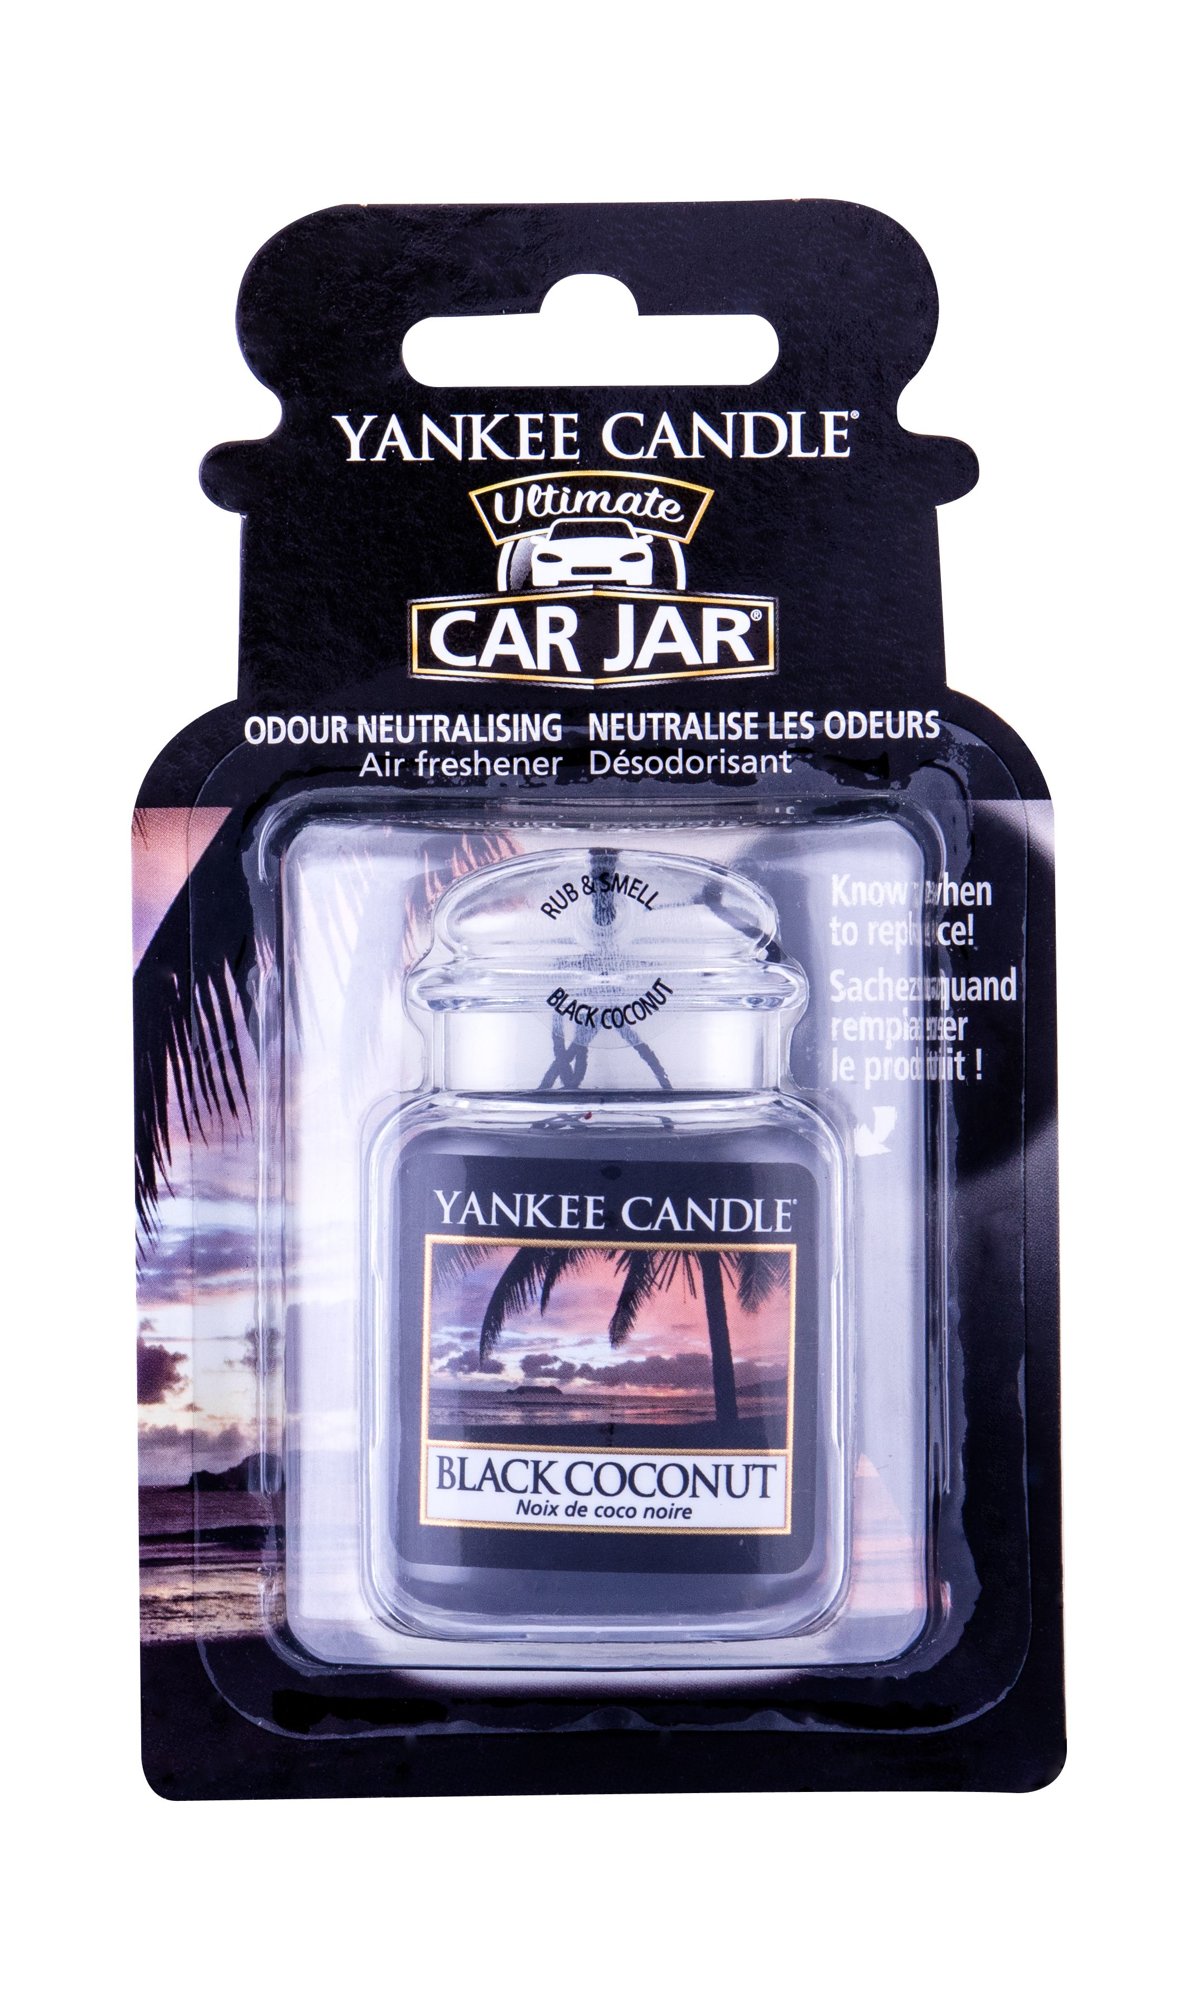 Noix de coco noire Car Jar® Ultimate - Car Jar® Ultimate